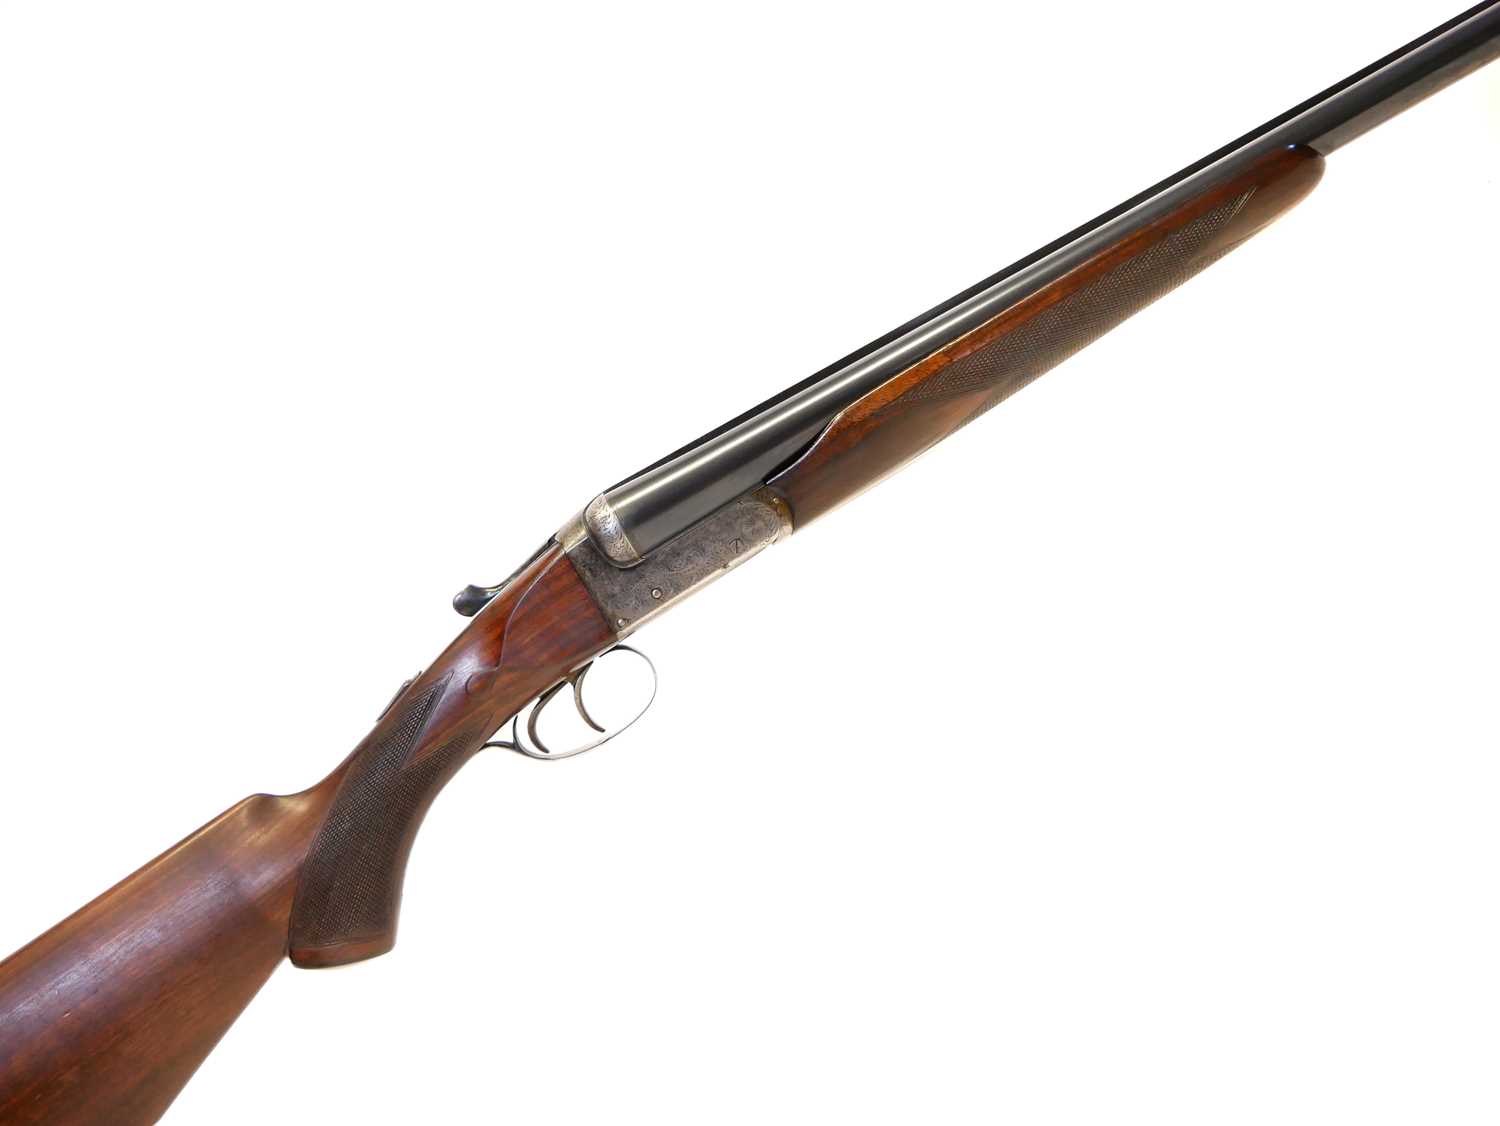 I.M. Crudgington of Bath 12 bore side by side shotgun, serial number 1400, 30 inch barrels with 3"